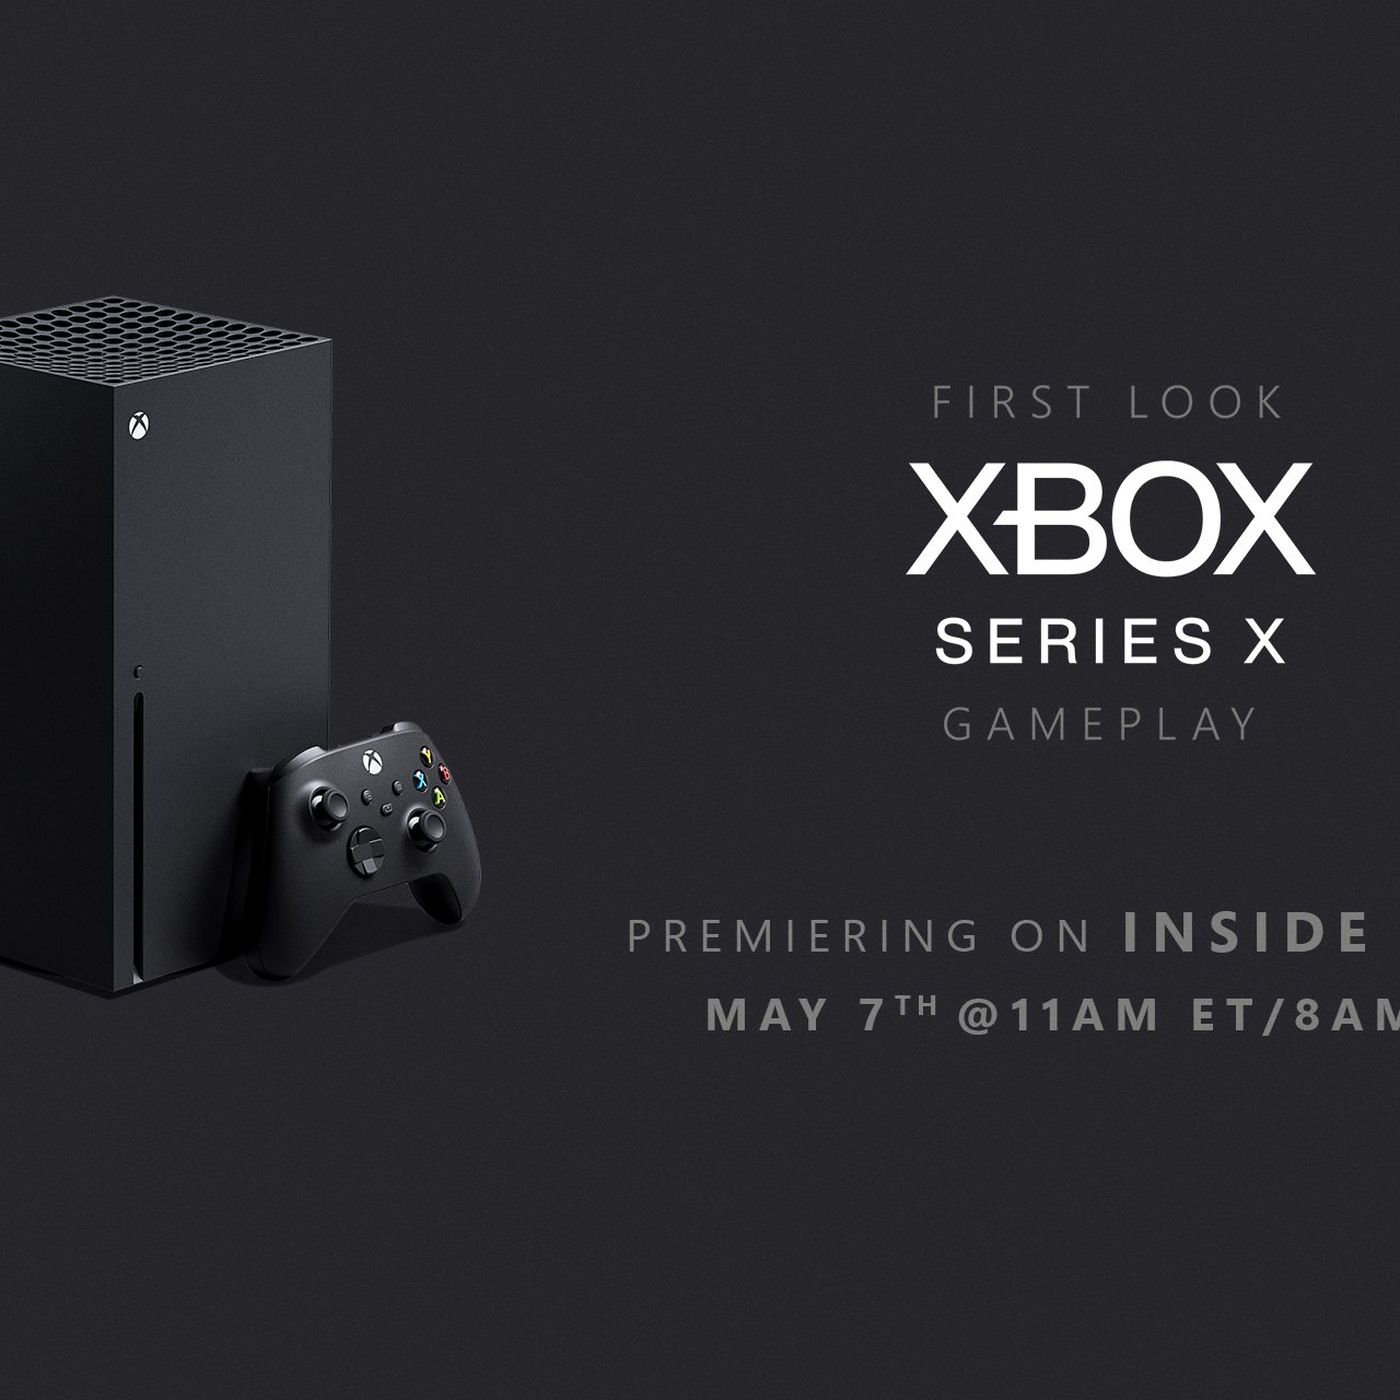 Klik ledematen Fotoelektrisch Microsoft to demo Xbox Series X games on May 7th - The Verge